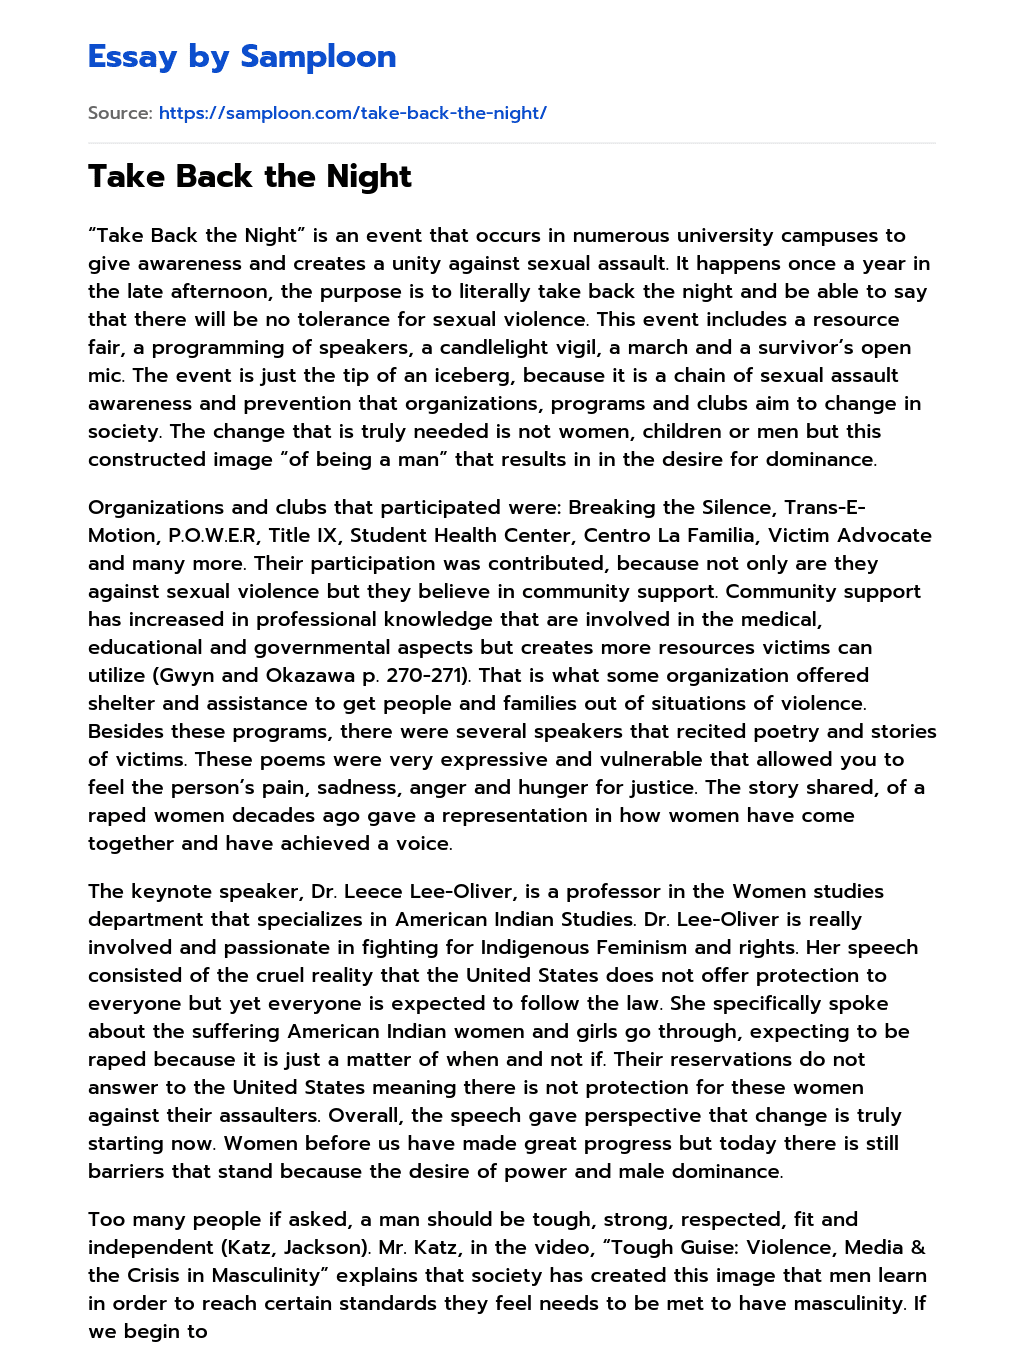 Take Back the Night essay